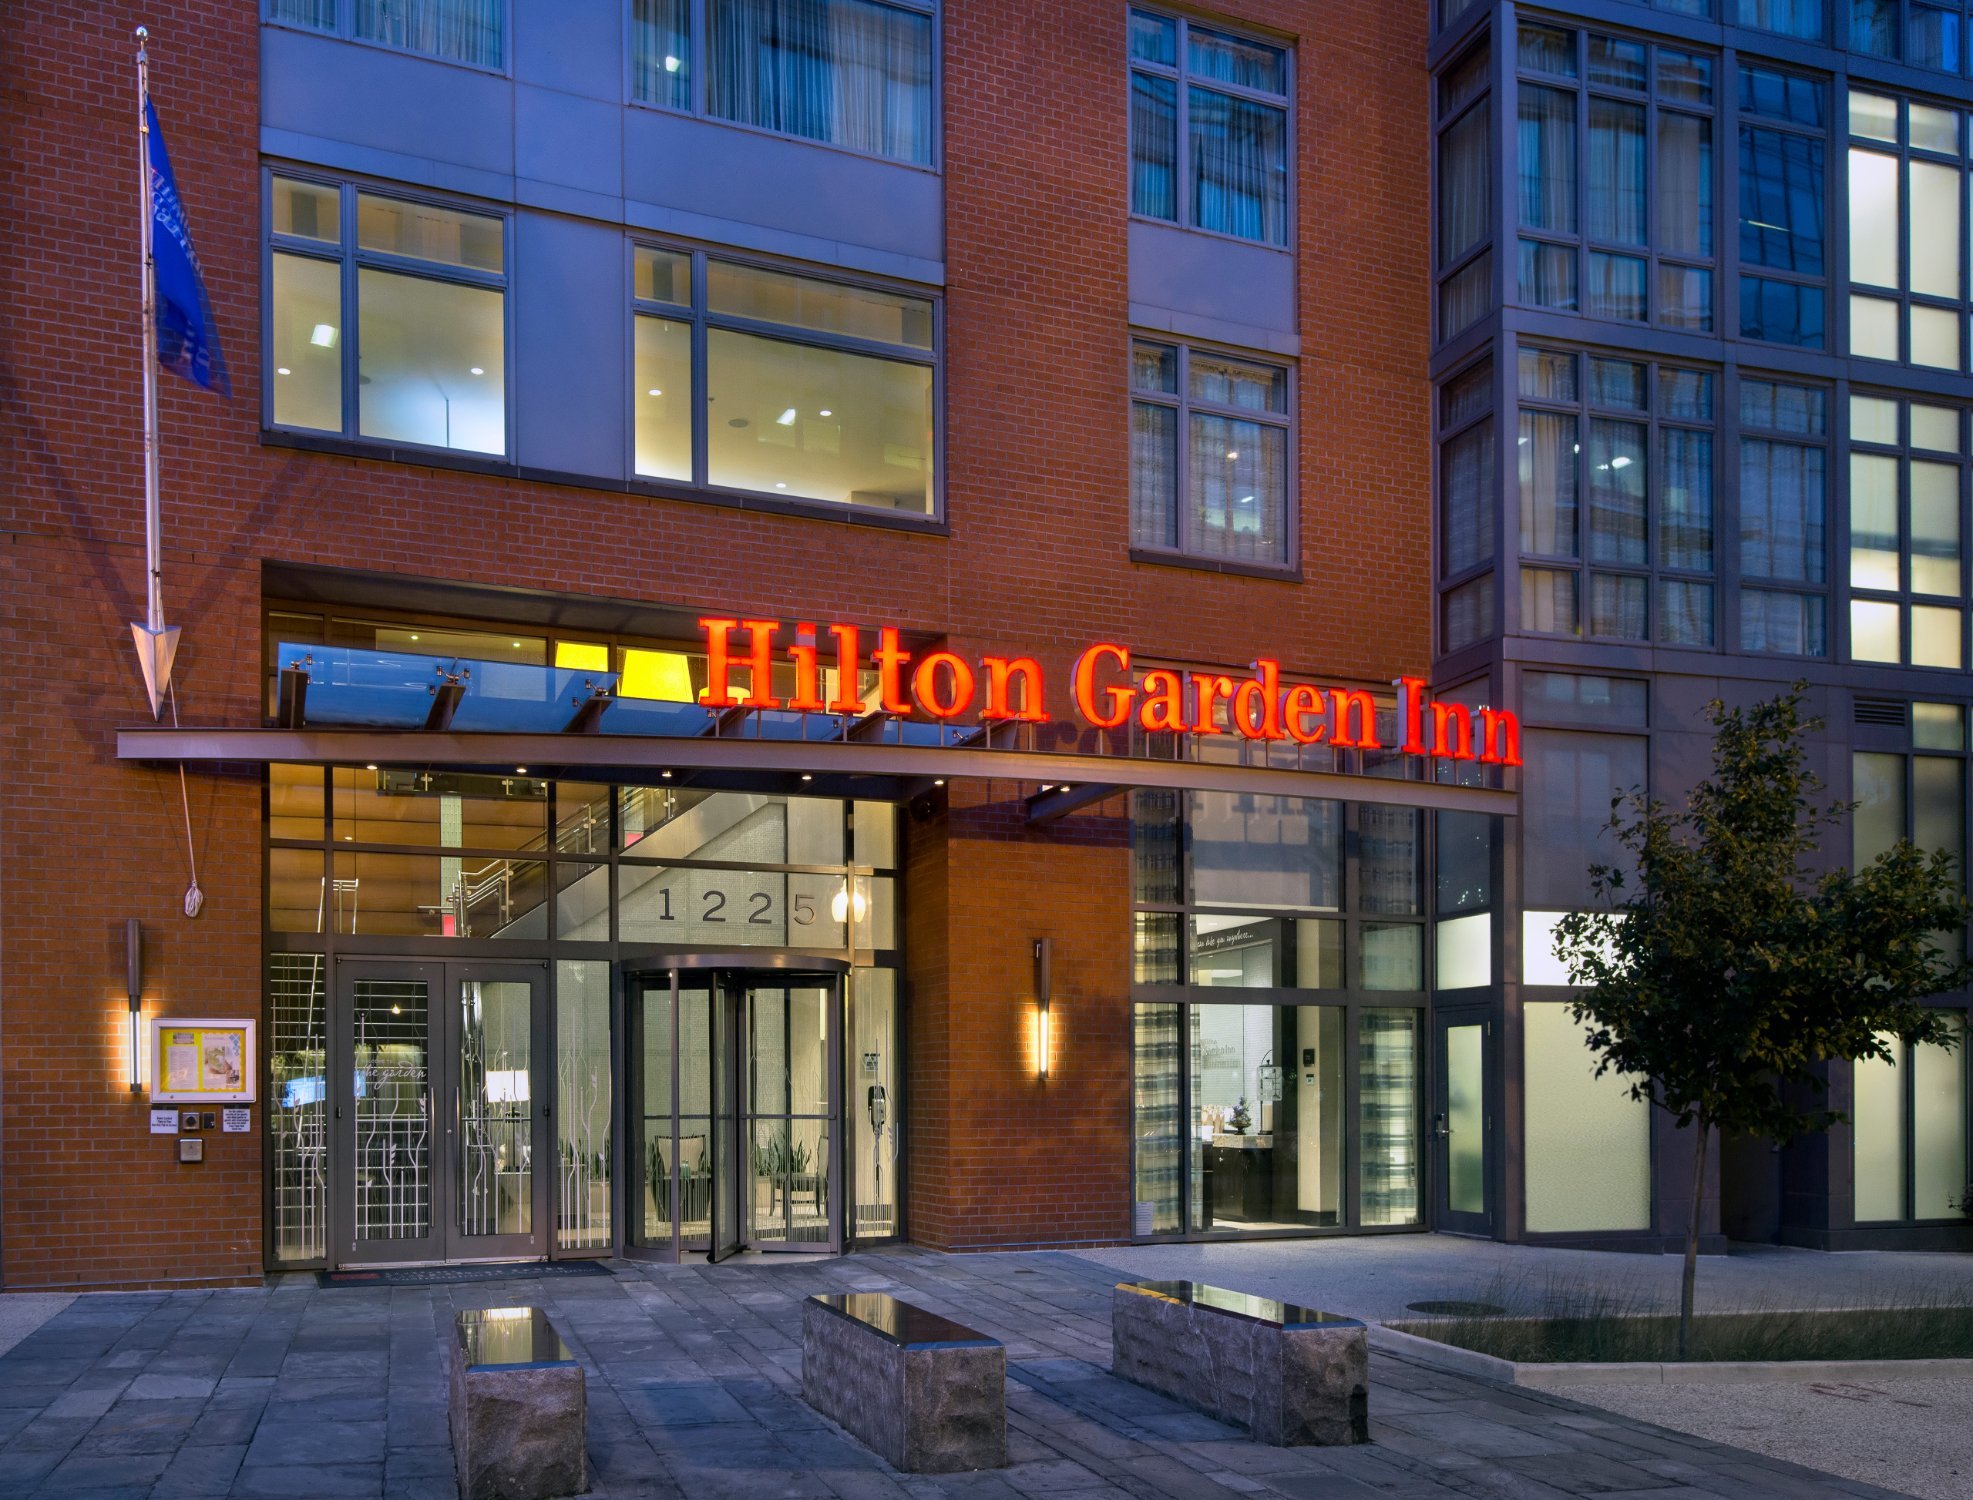 Photo of Hilton Garden Inn Washington DC/U.S. Capitol, Washington, DC